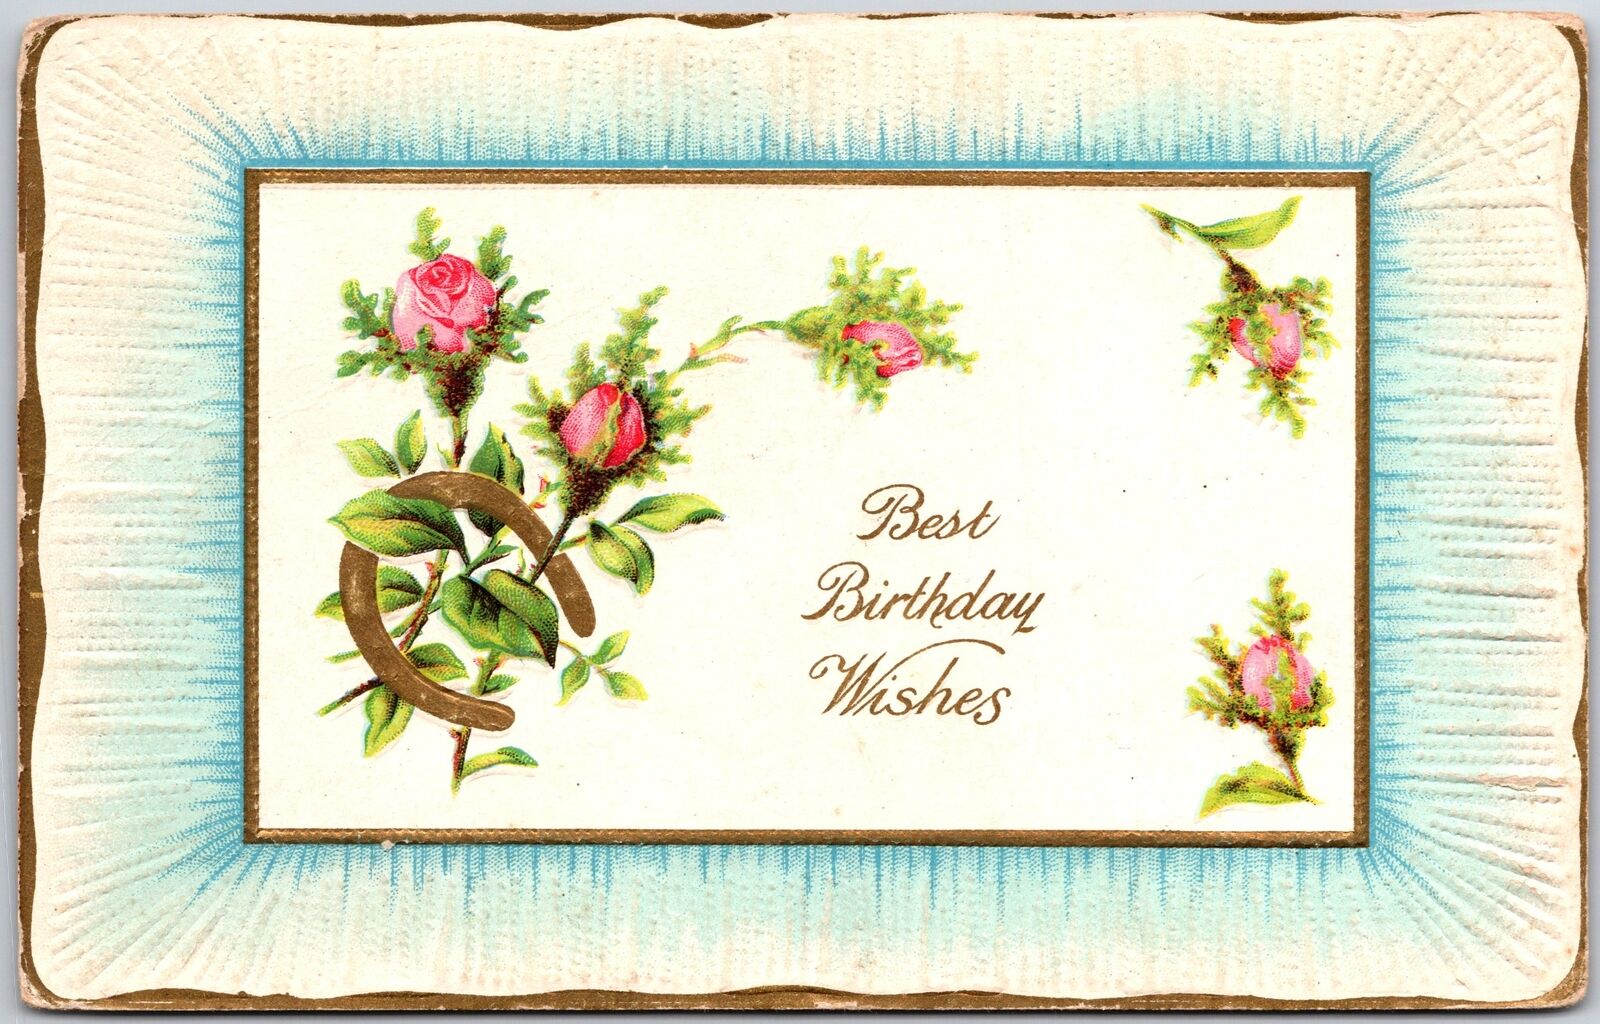 Best Birthday Wishes, Horseshoe & Pink Roses, Gold Border, Vintage Postcard